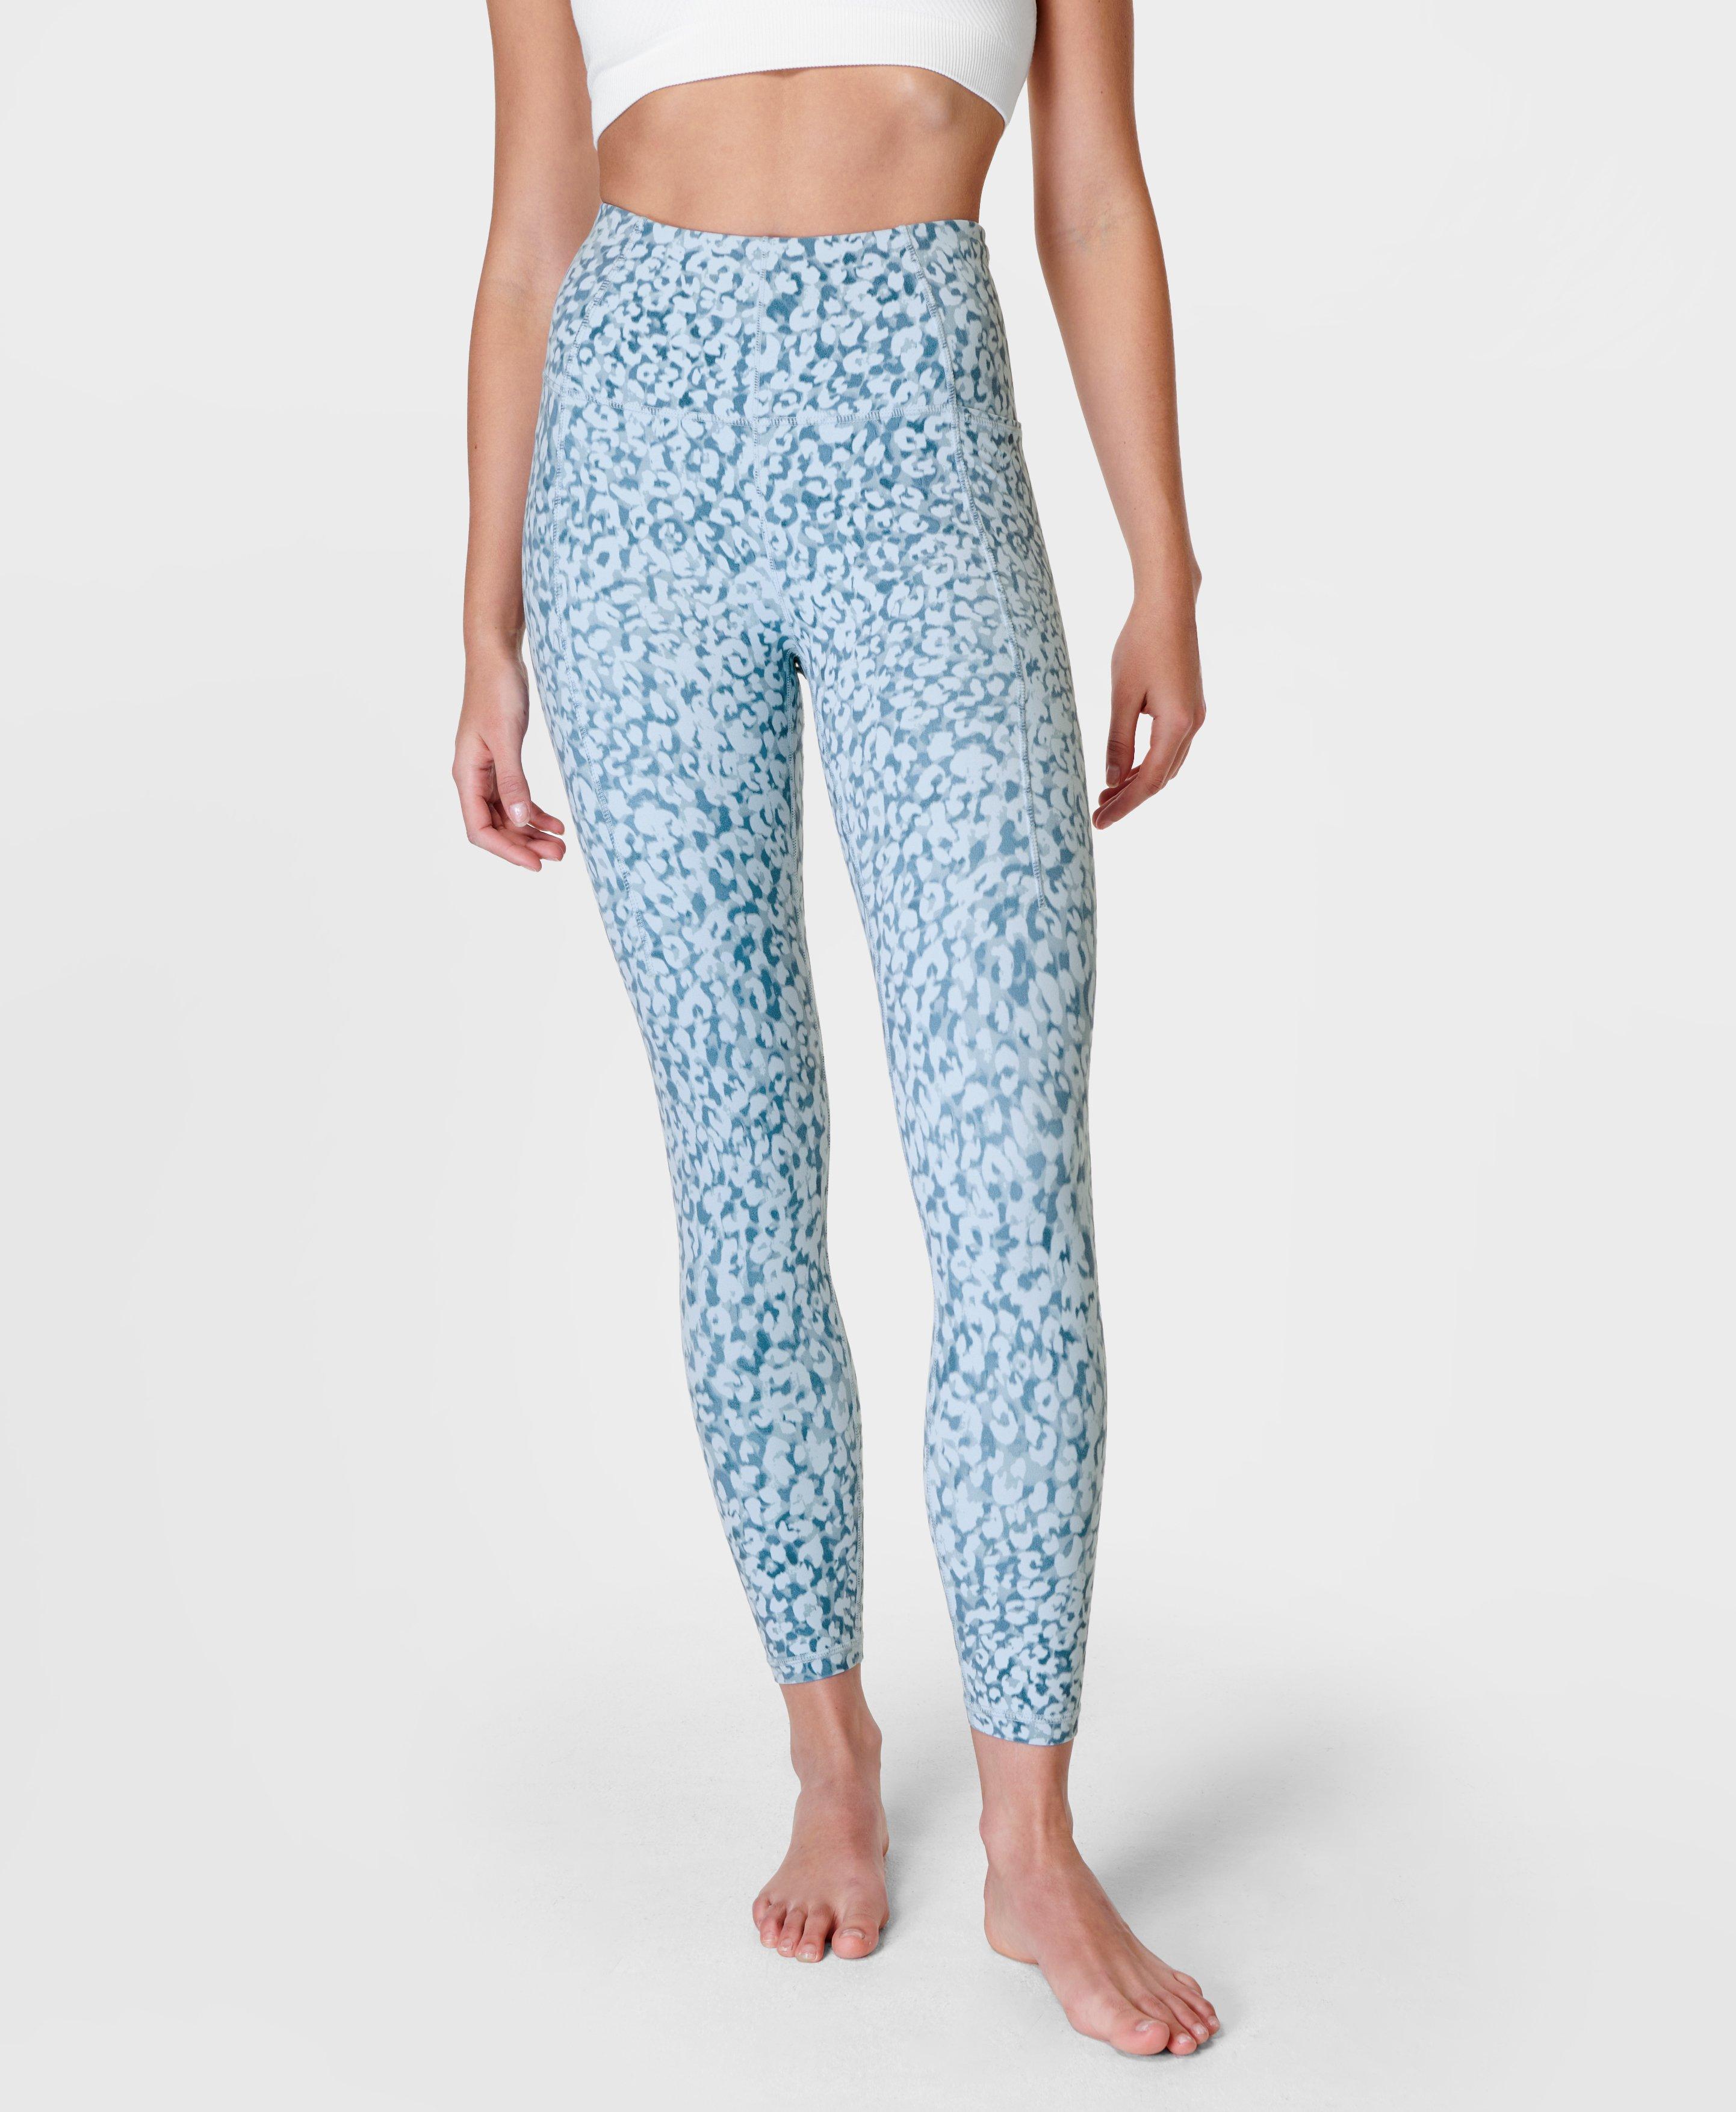 Super Soft 7/8 Yoga Leggings - Blue Snow Leopard Print